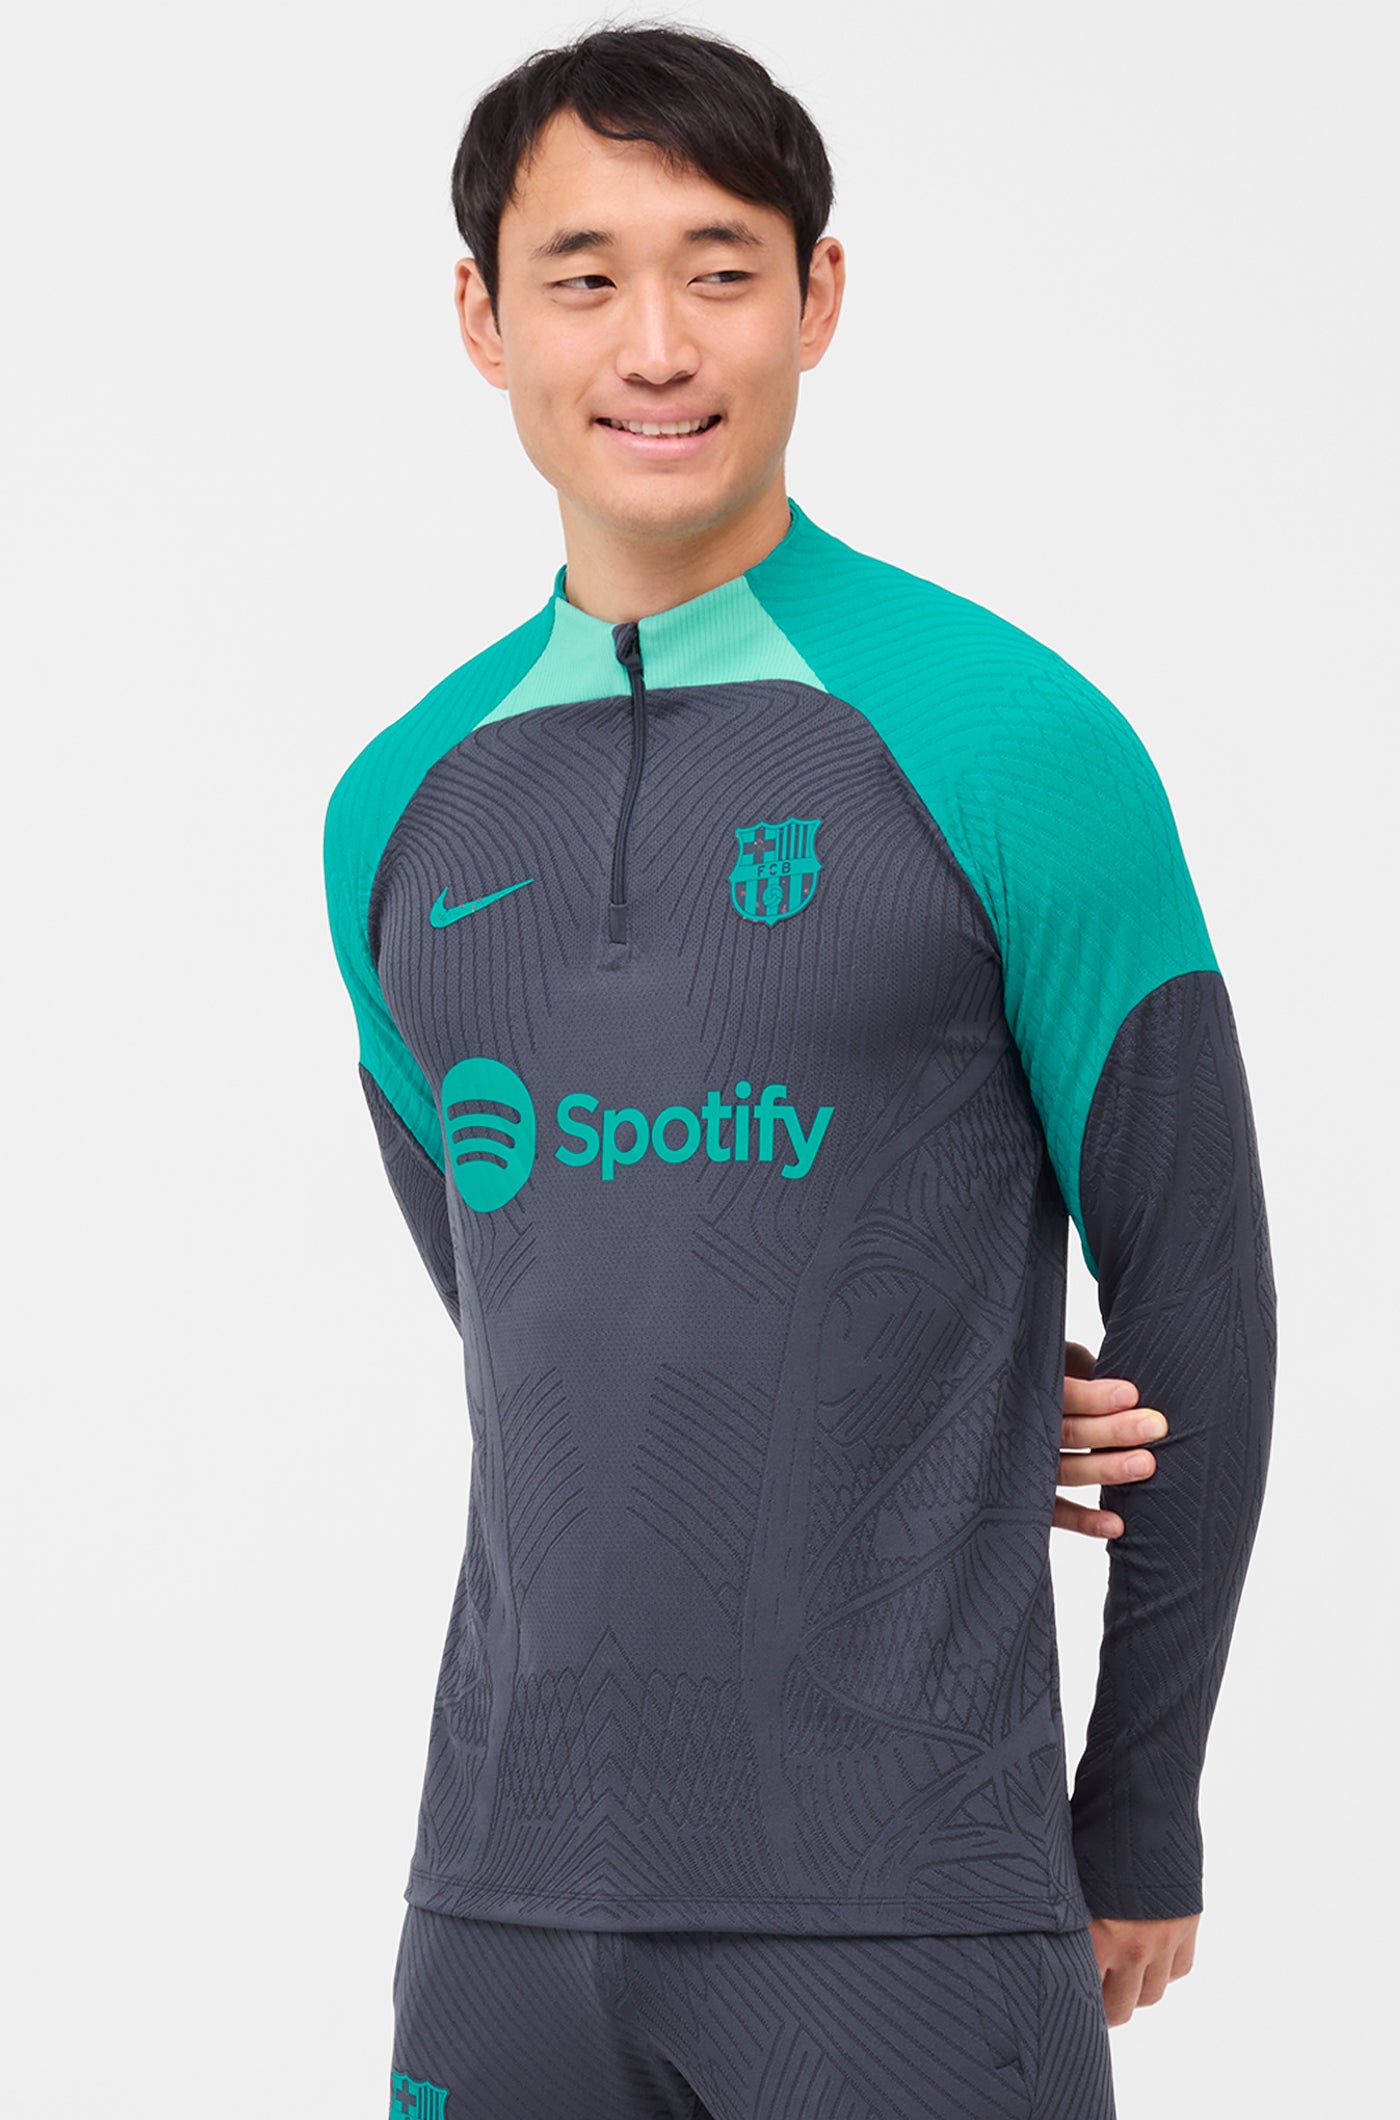 FC Barcelona Apparel, Kits, Jerseys, Training Jackets, Masks